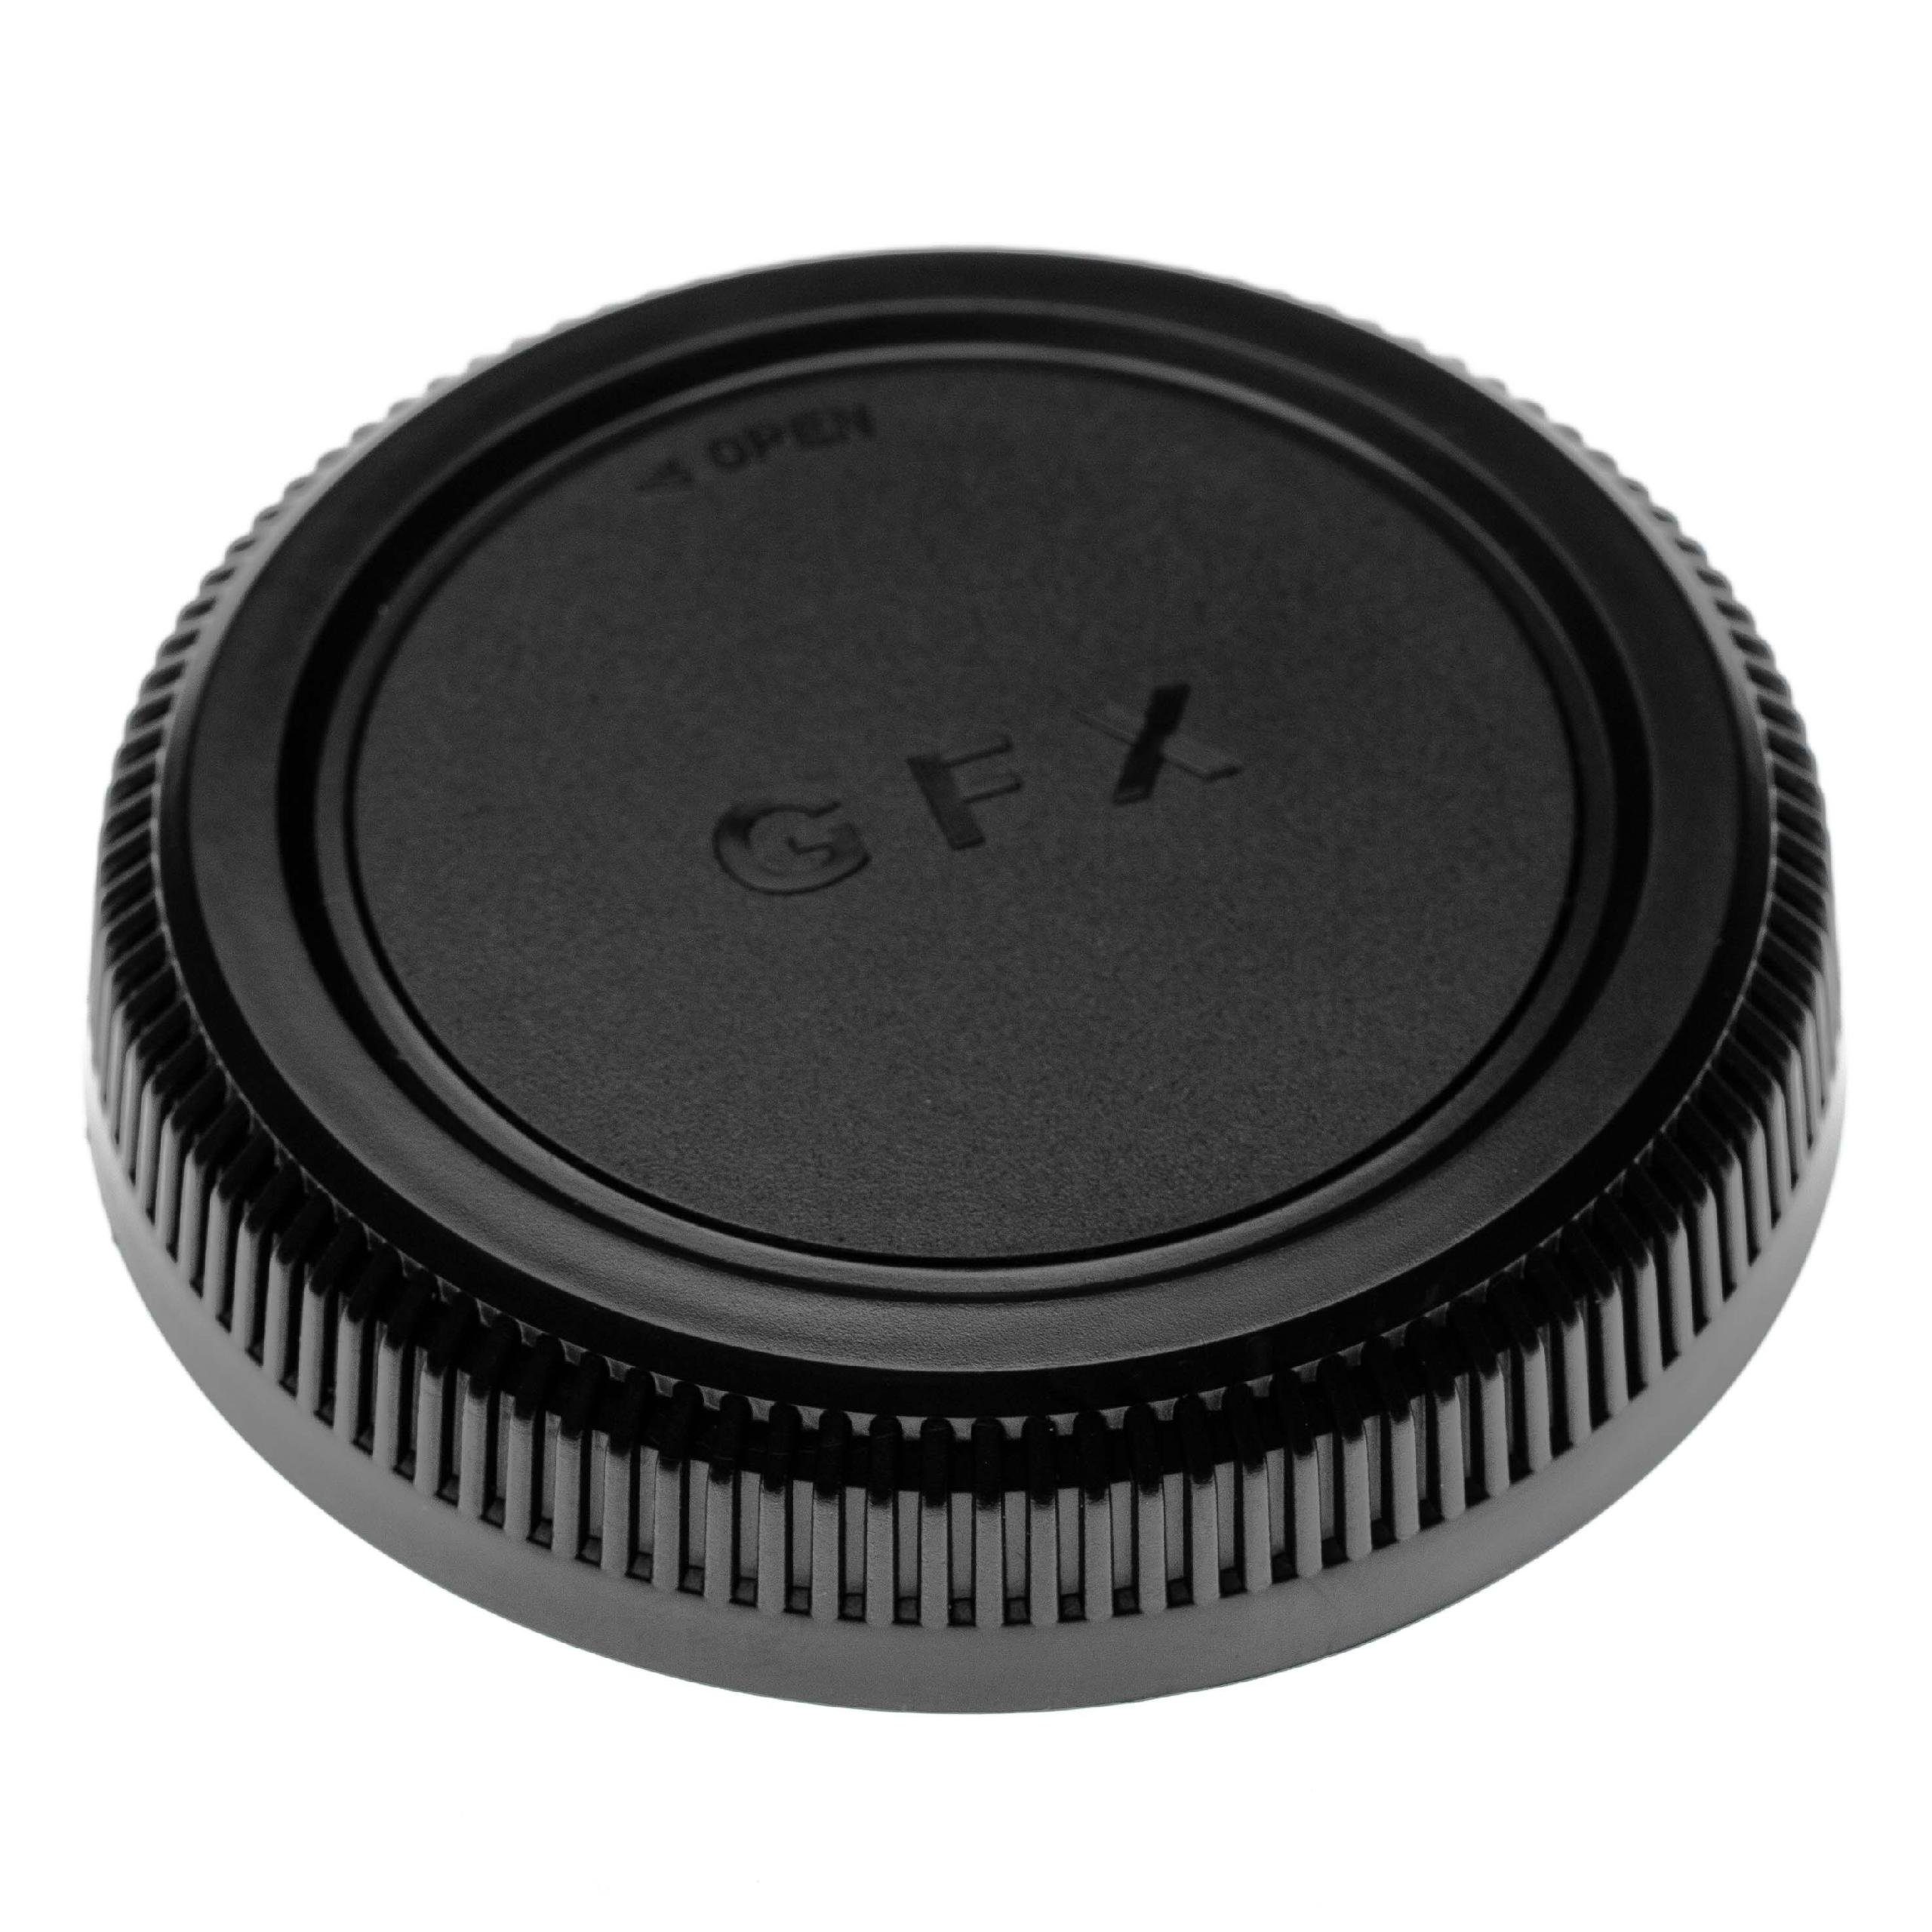 Kamera für Objektivrückdeckel Fujifilm GFX-Serie vhbw passend